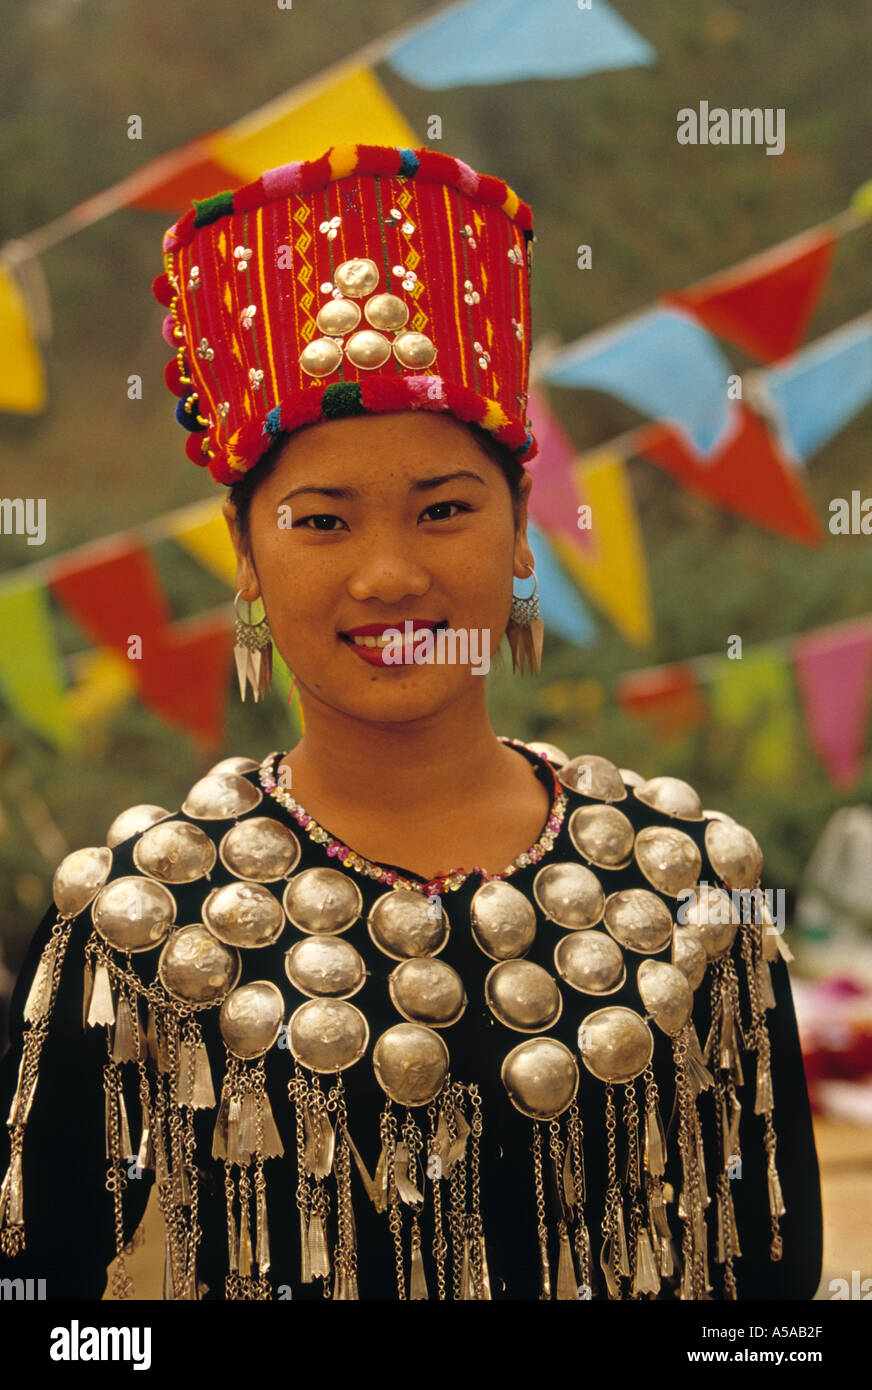 Jingpo Ethnic costume, Yunan, China Stock Photo